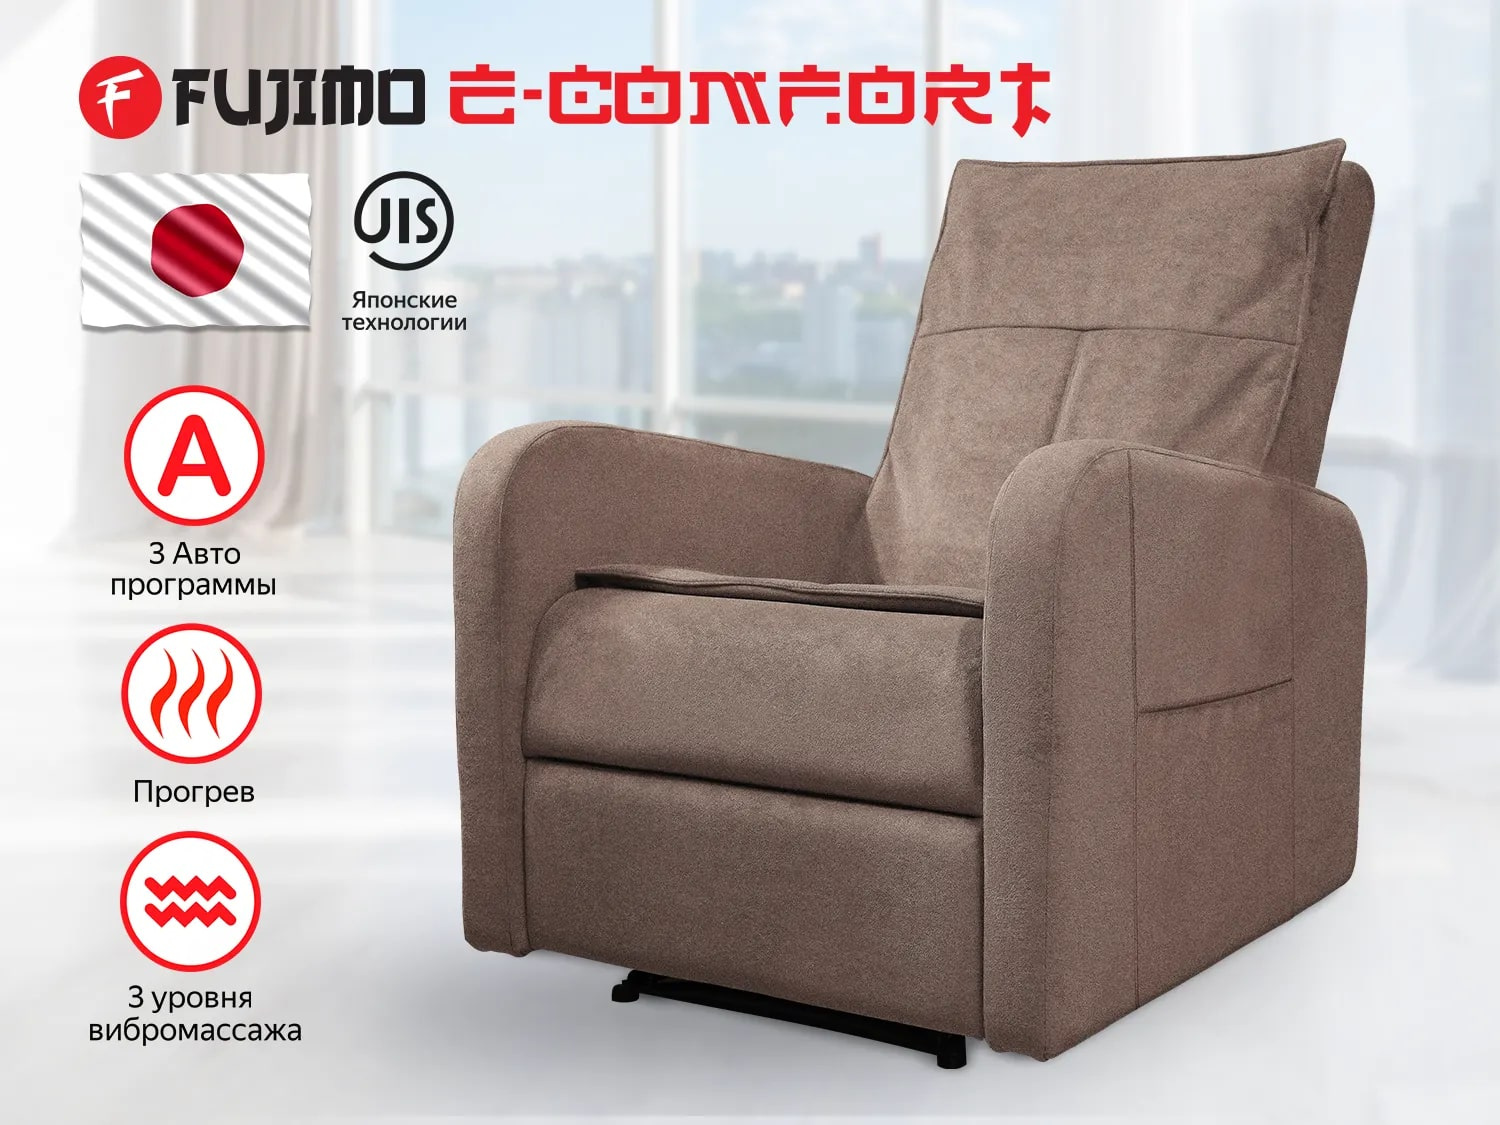 E-COMFORT CHAIR F3005 FEF с электроприводом Терра в Самаре по цене 72000 ₽ в категории массажные кресла Fujimo